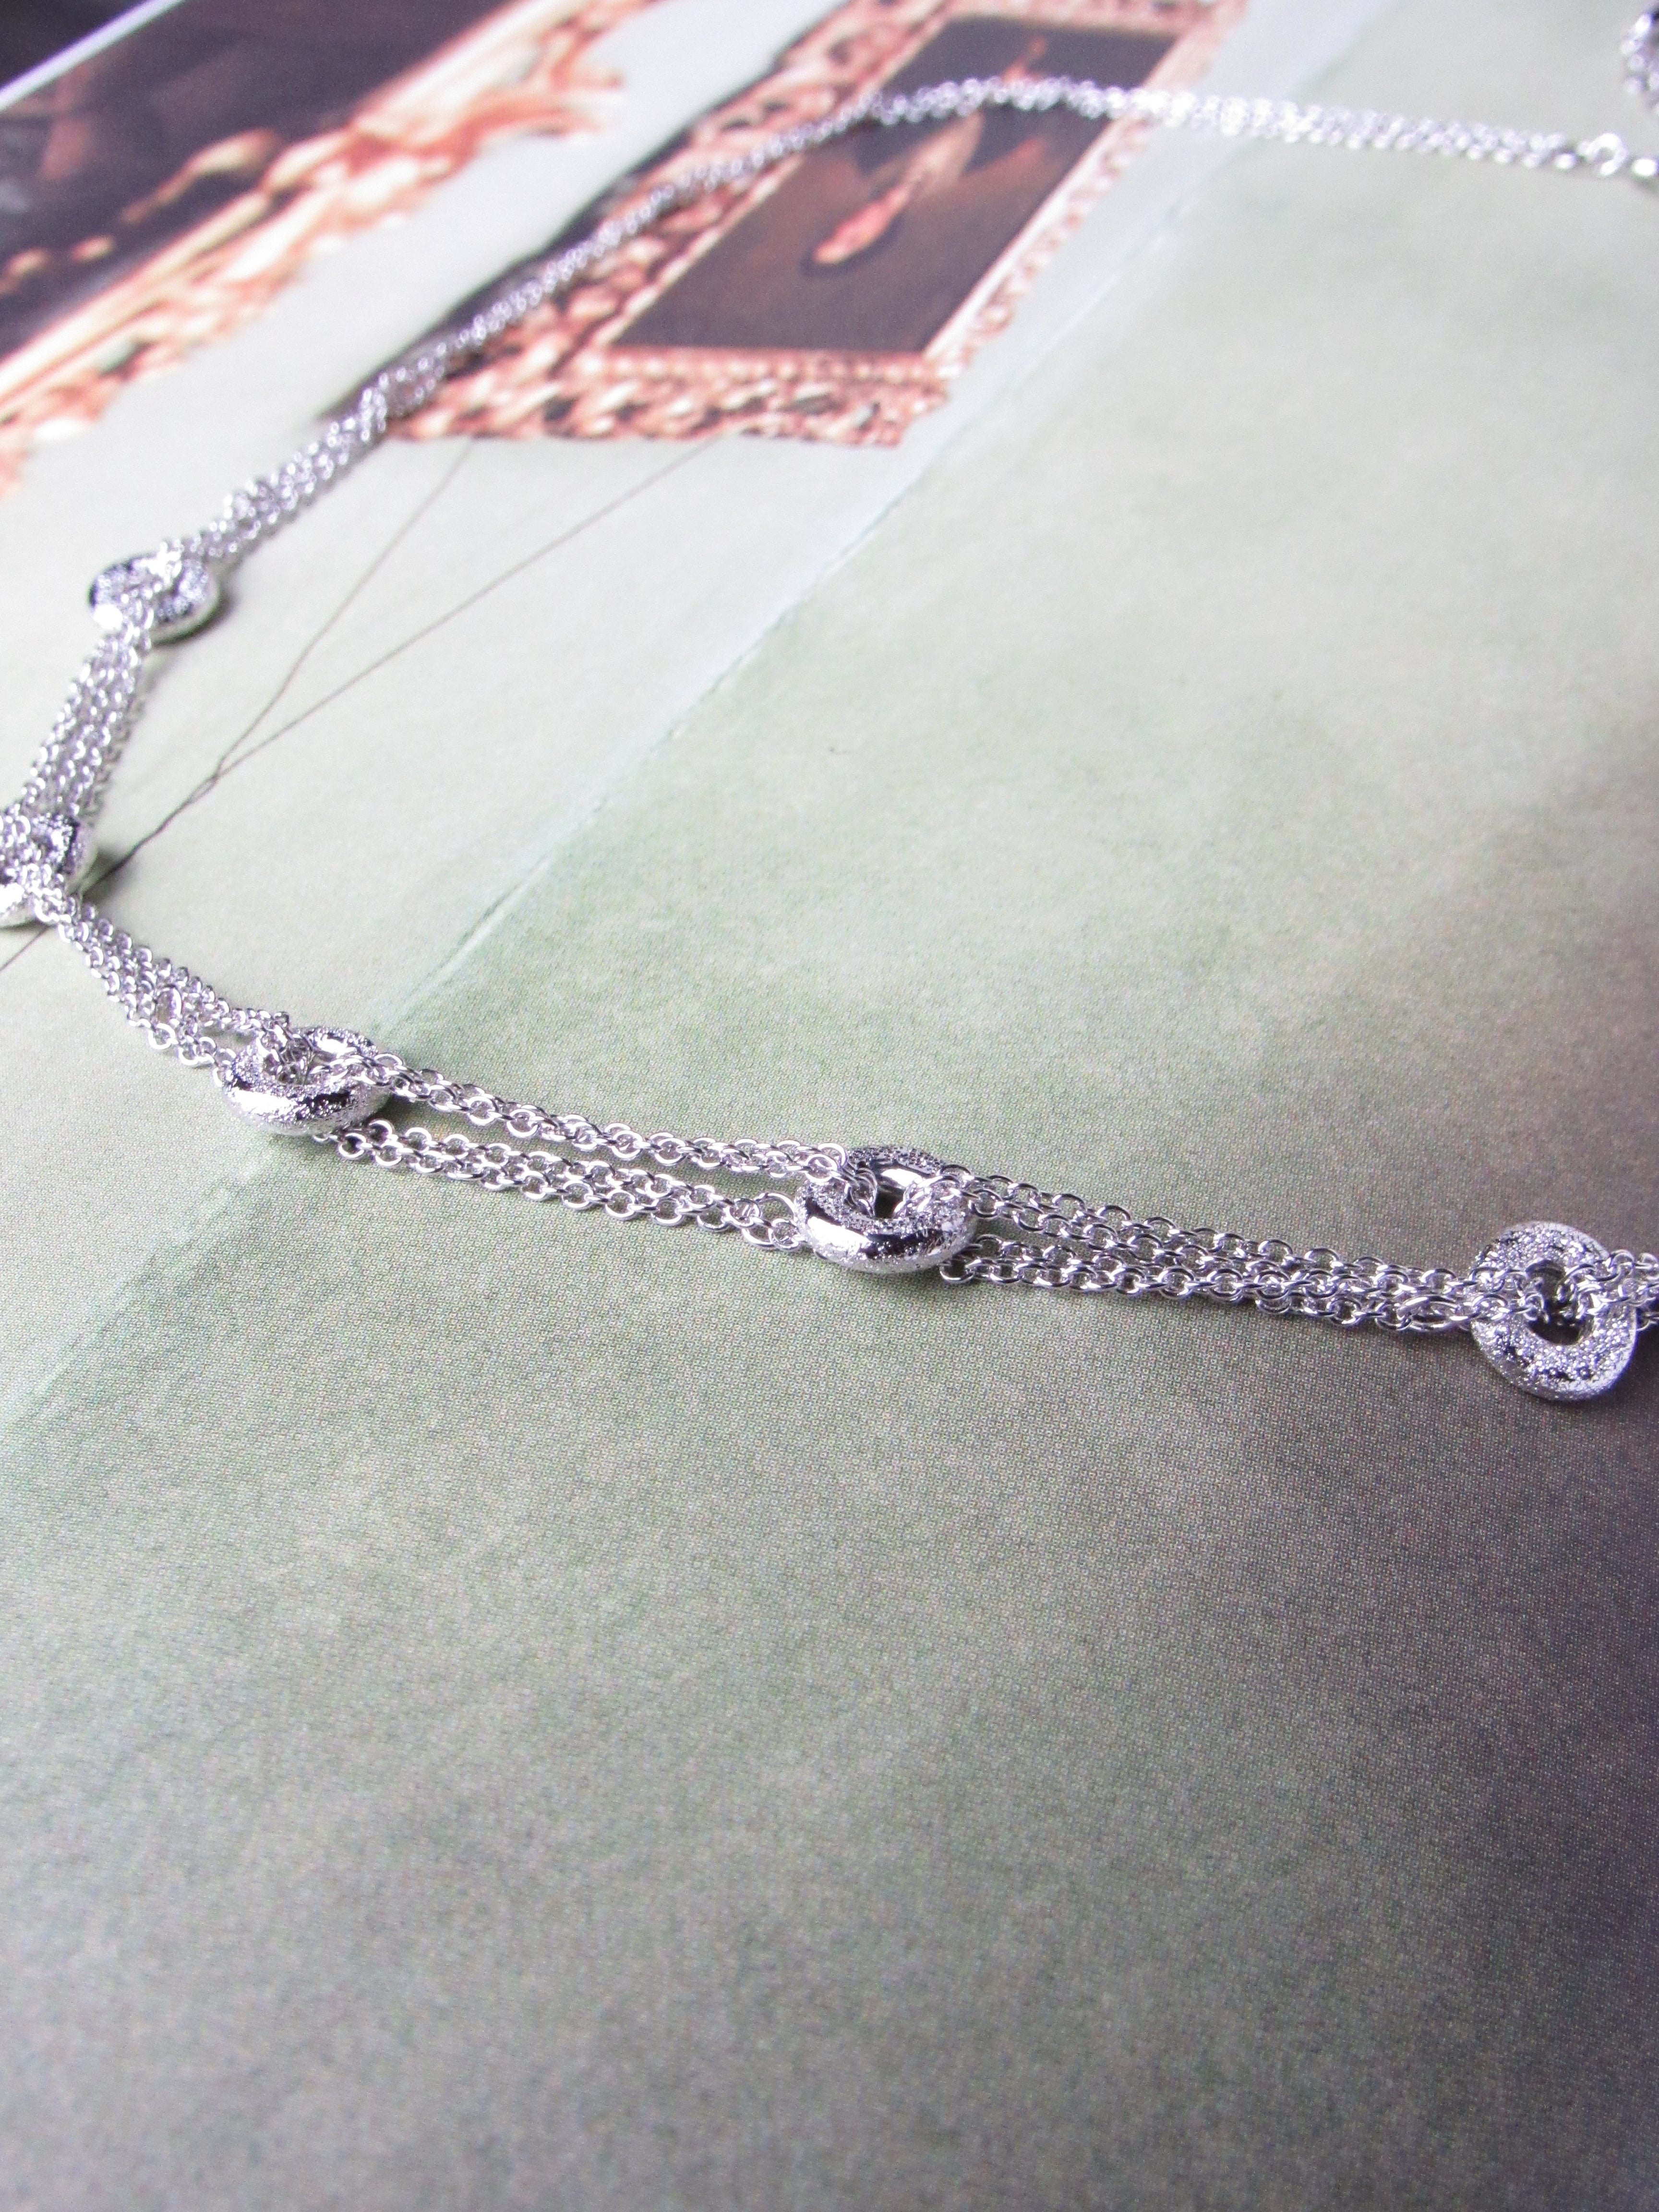 Unique 14k Solid White Gold Chain Necklace